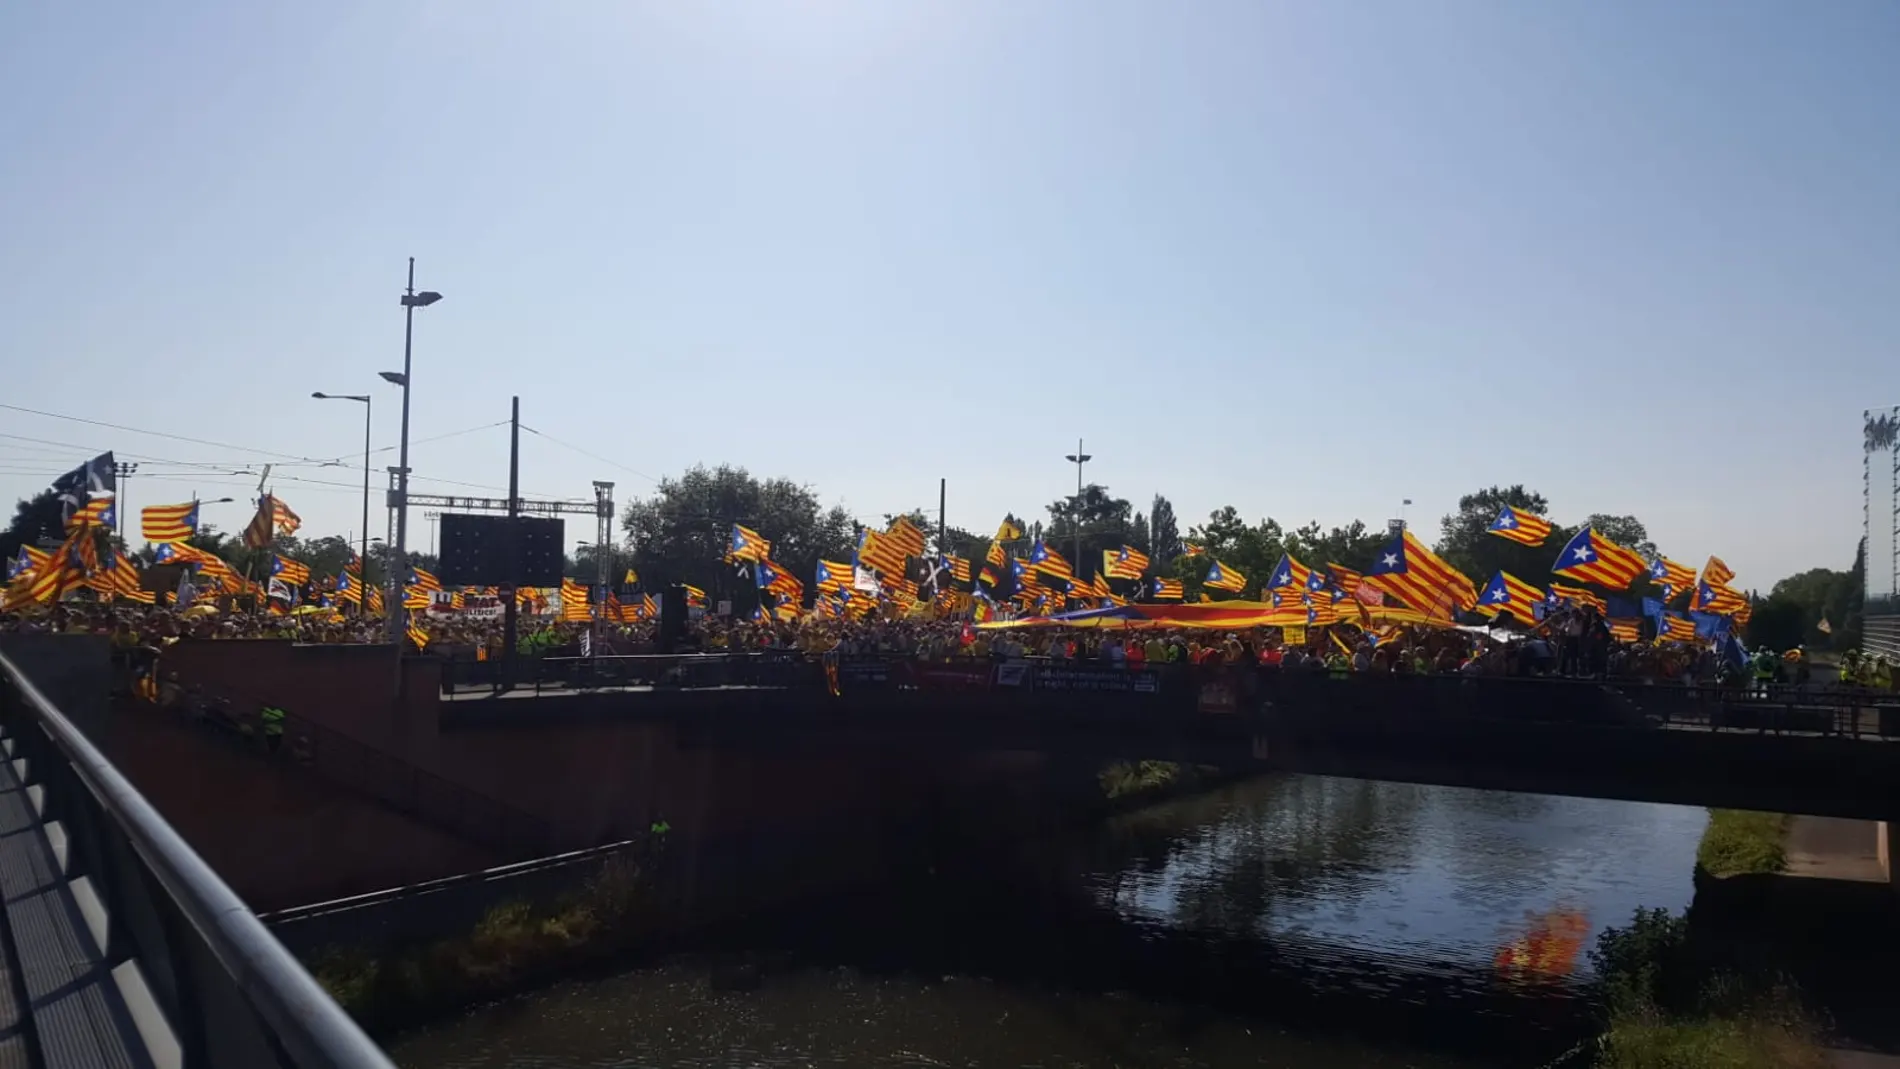 Manifestación independentista en Cataluña